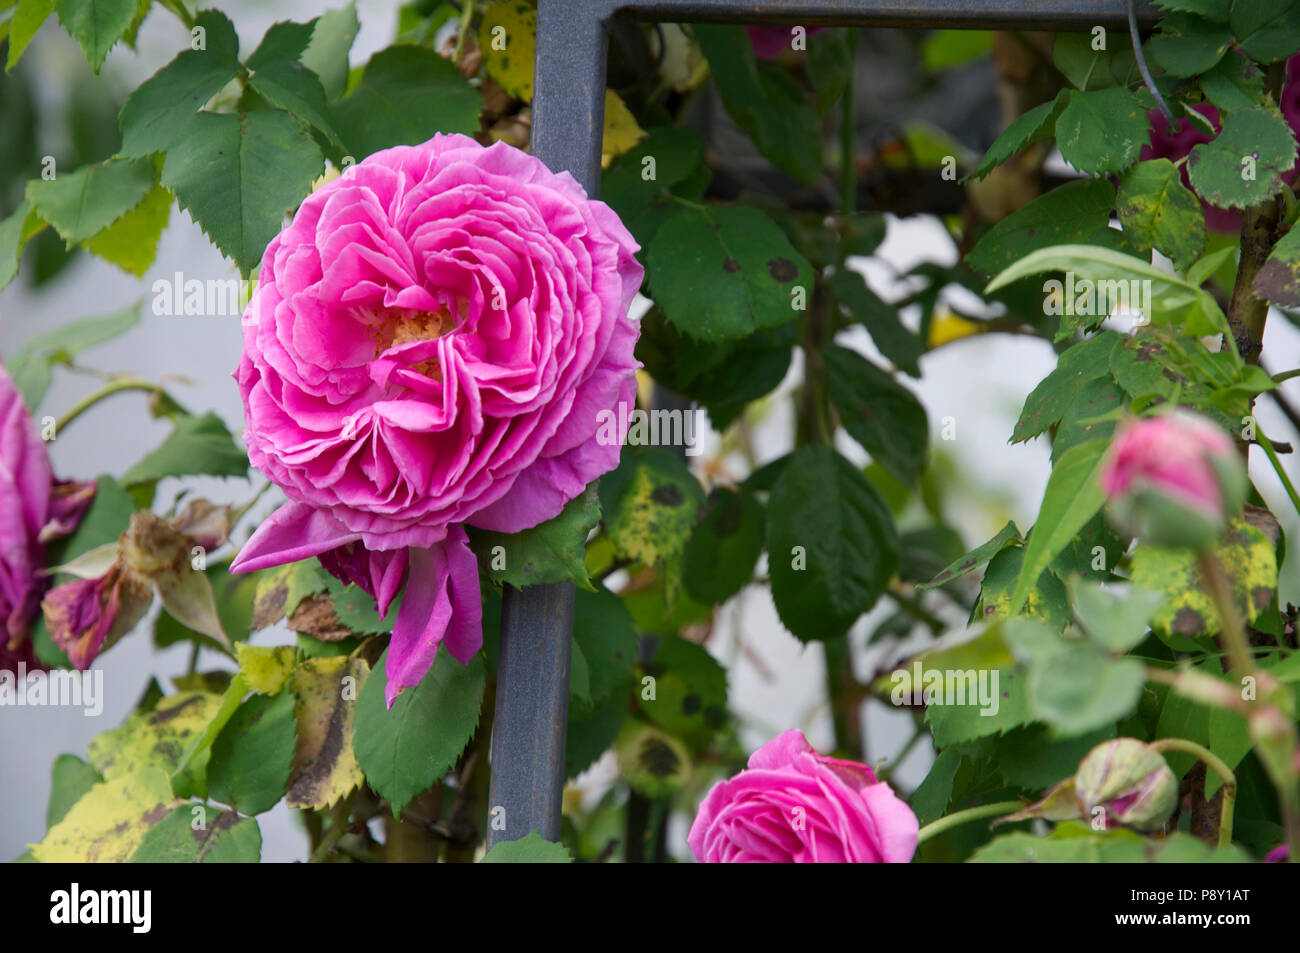 Shocking pink double rose Stock Photo